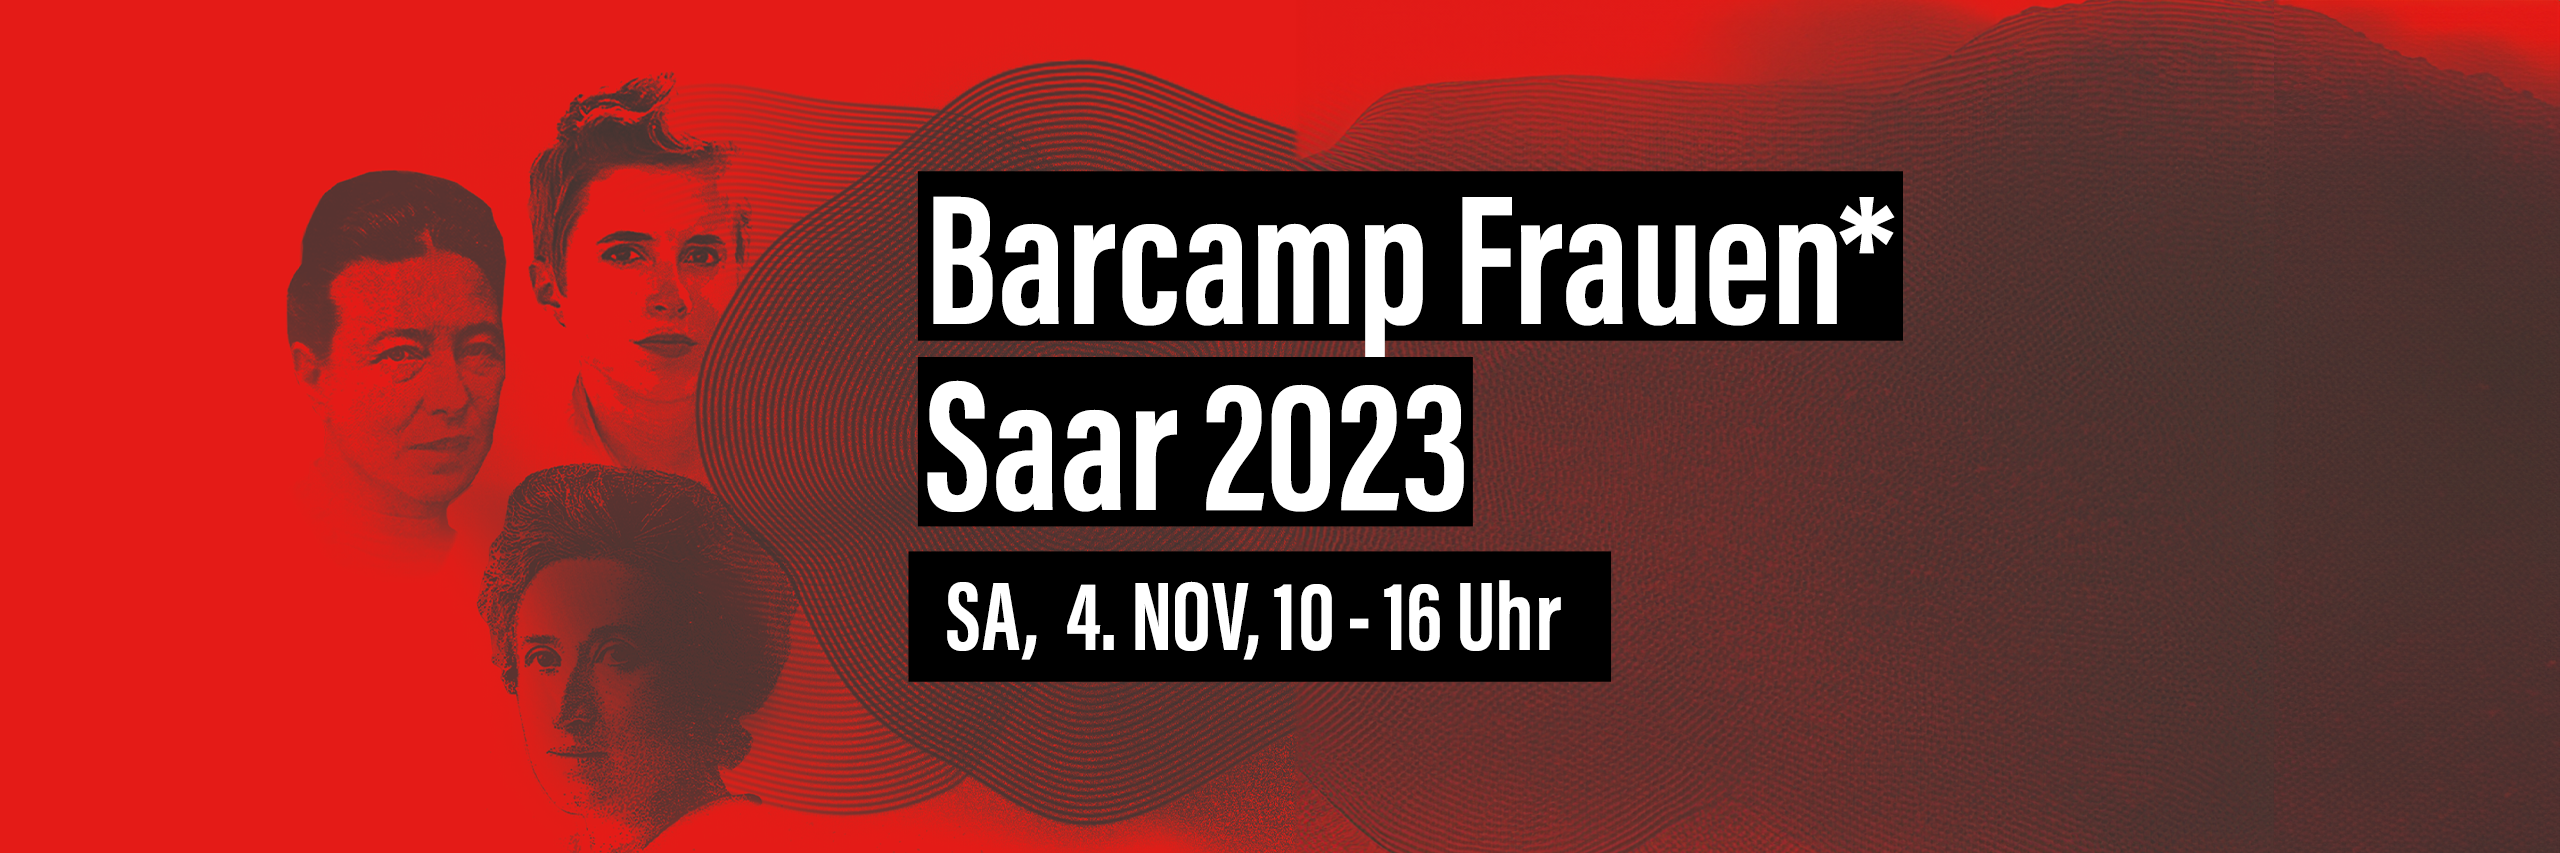 Barcamp Frauen Saar 2023